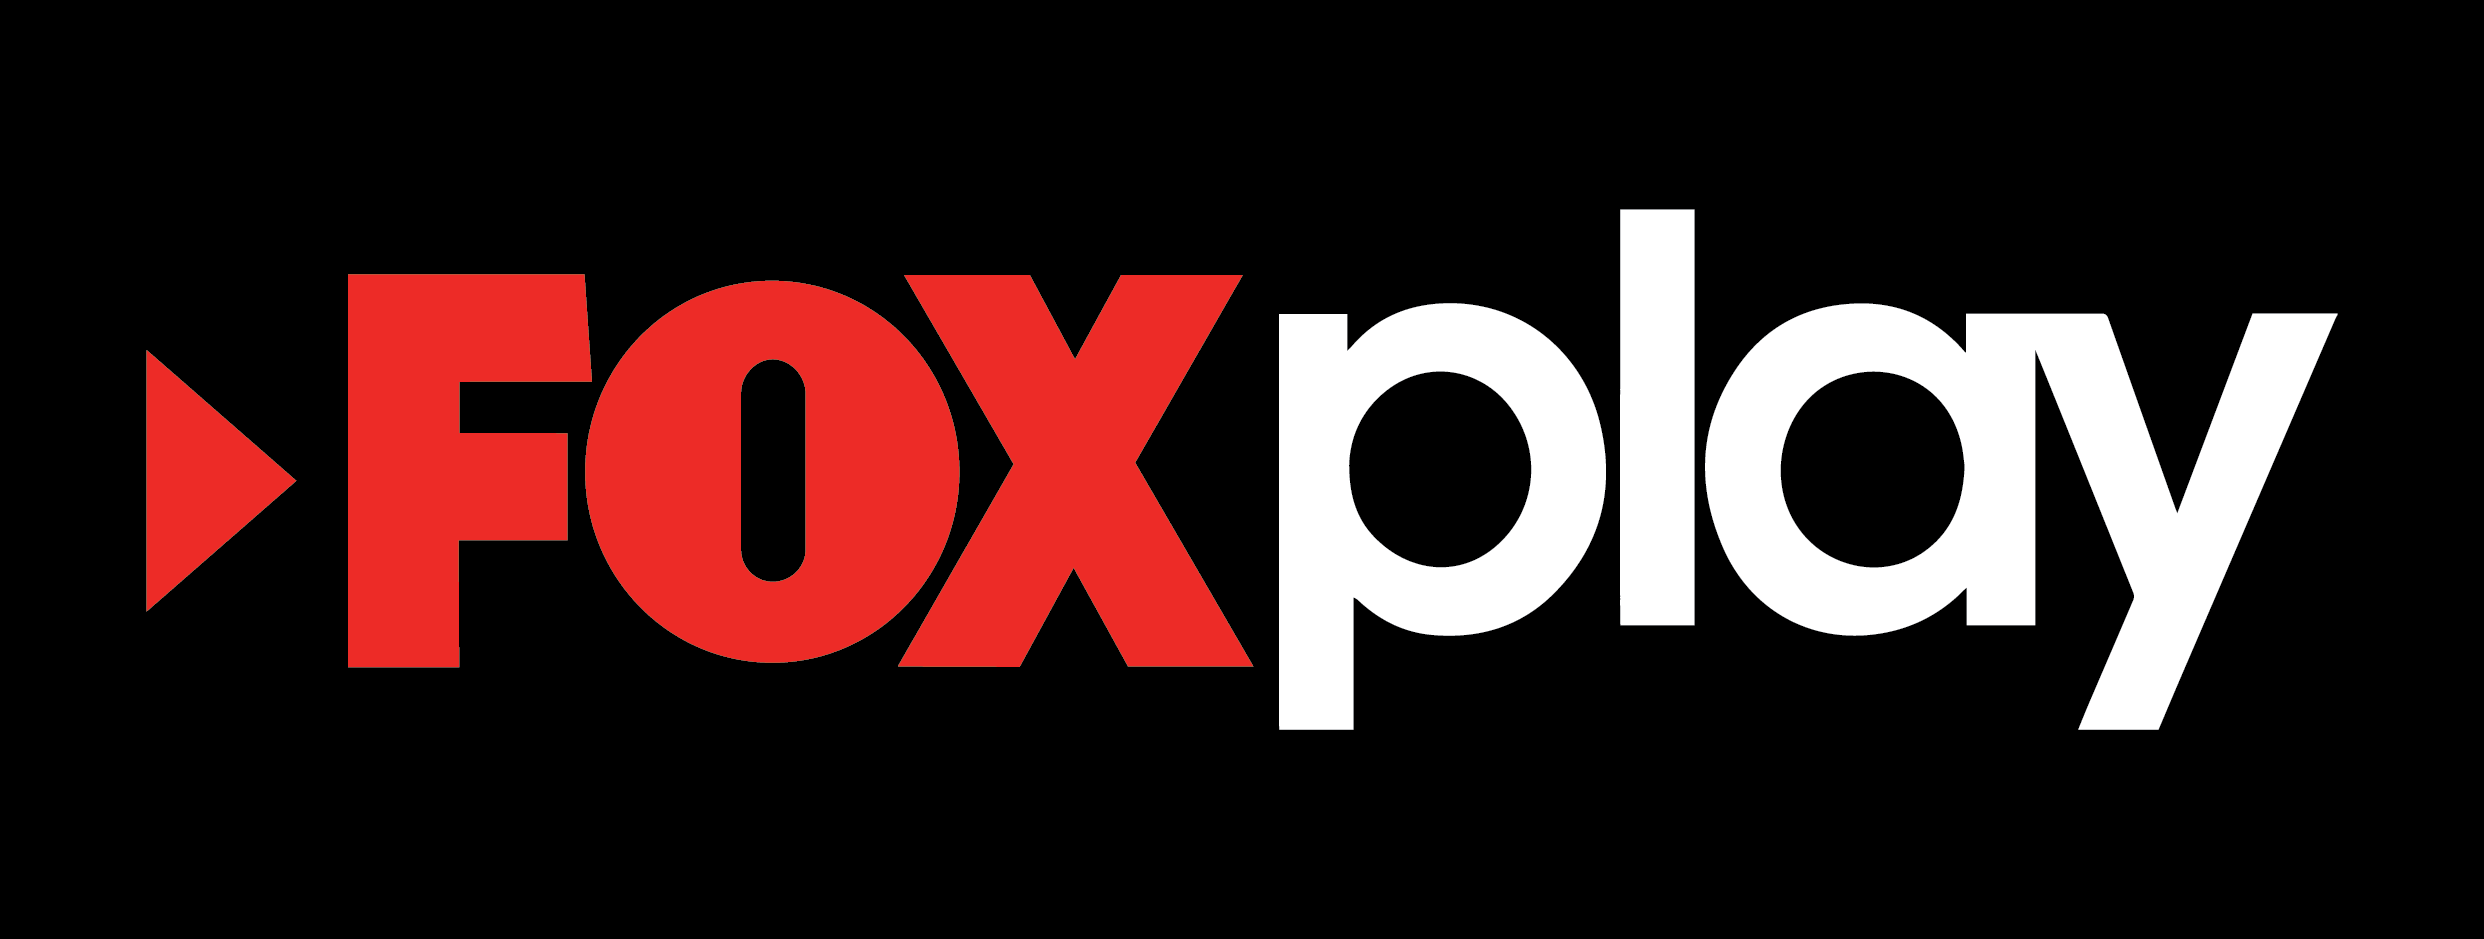 Телевизор fox. Телеканал Fox. Foxplay. Канал Fox TV. Фокс ТВ логотип.